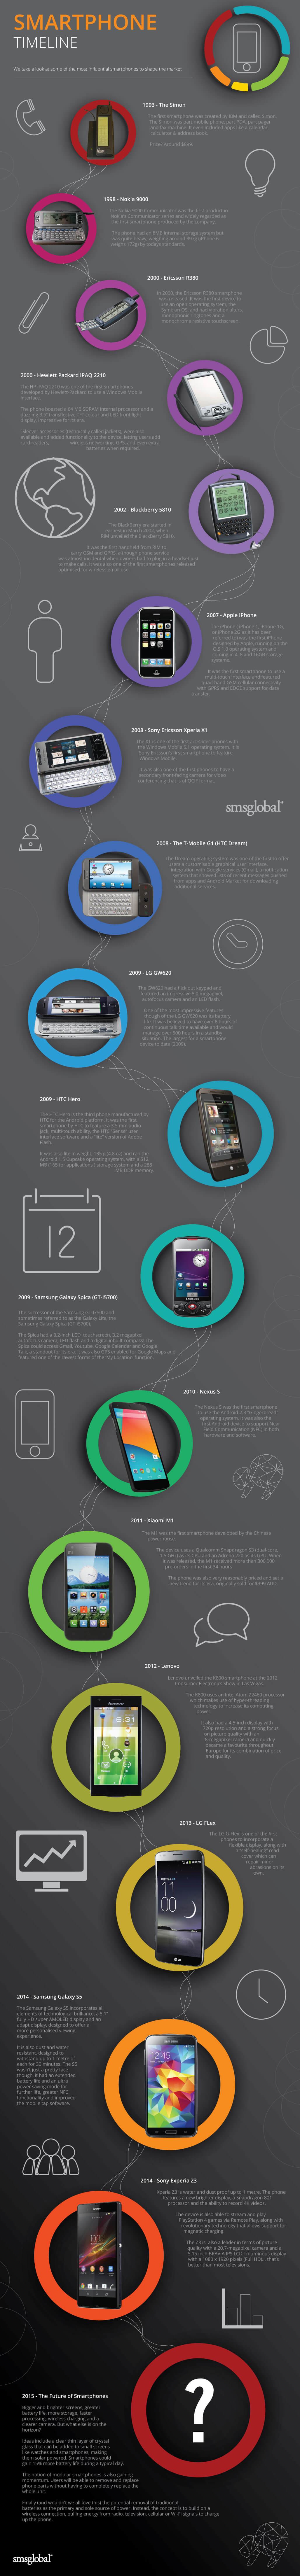 Smartphone Evolution Infographic